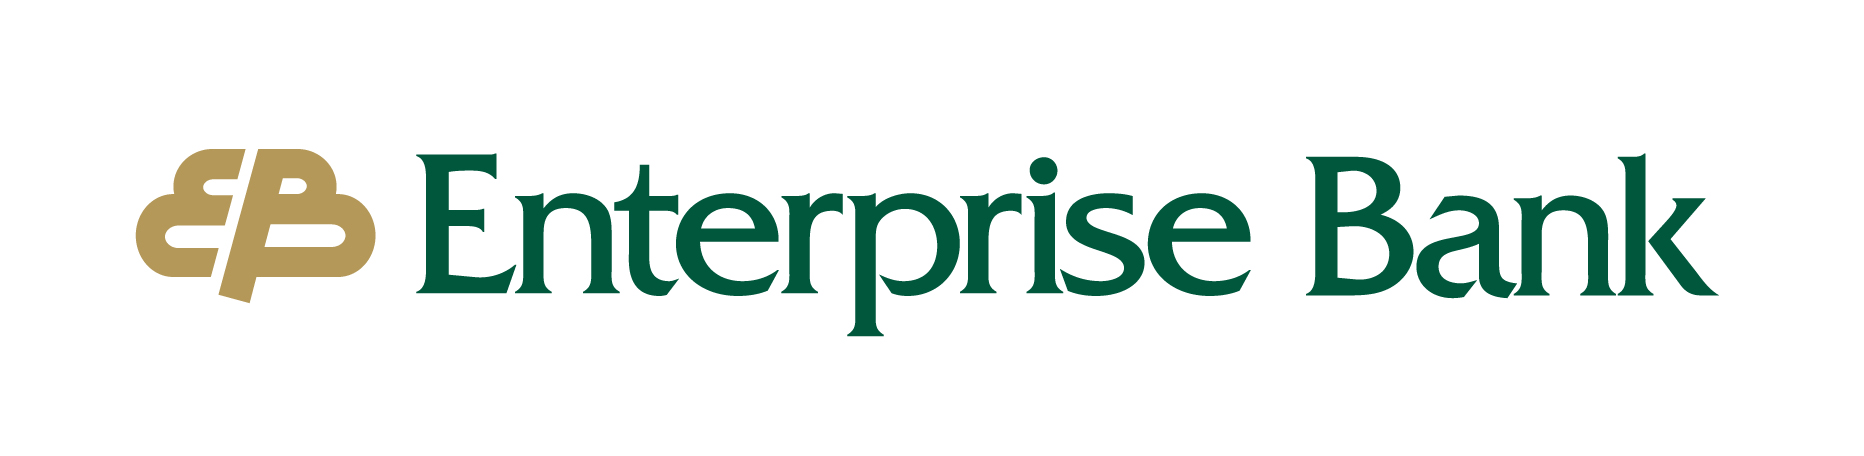 enterprise-bank-logo-1.jpg